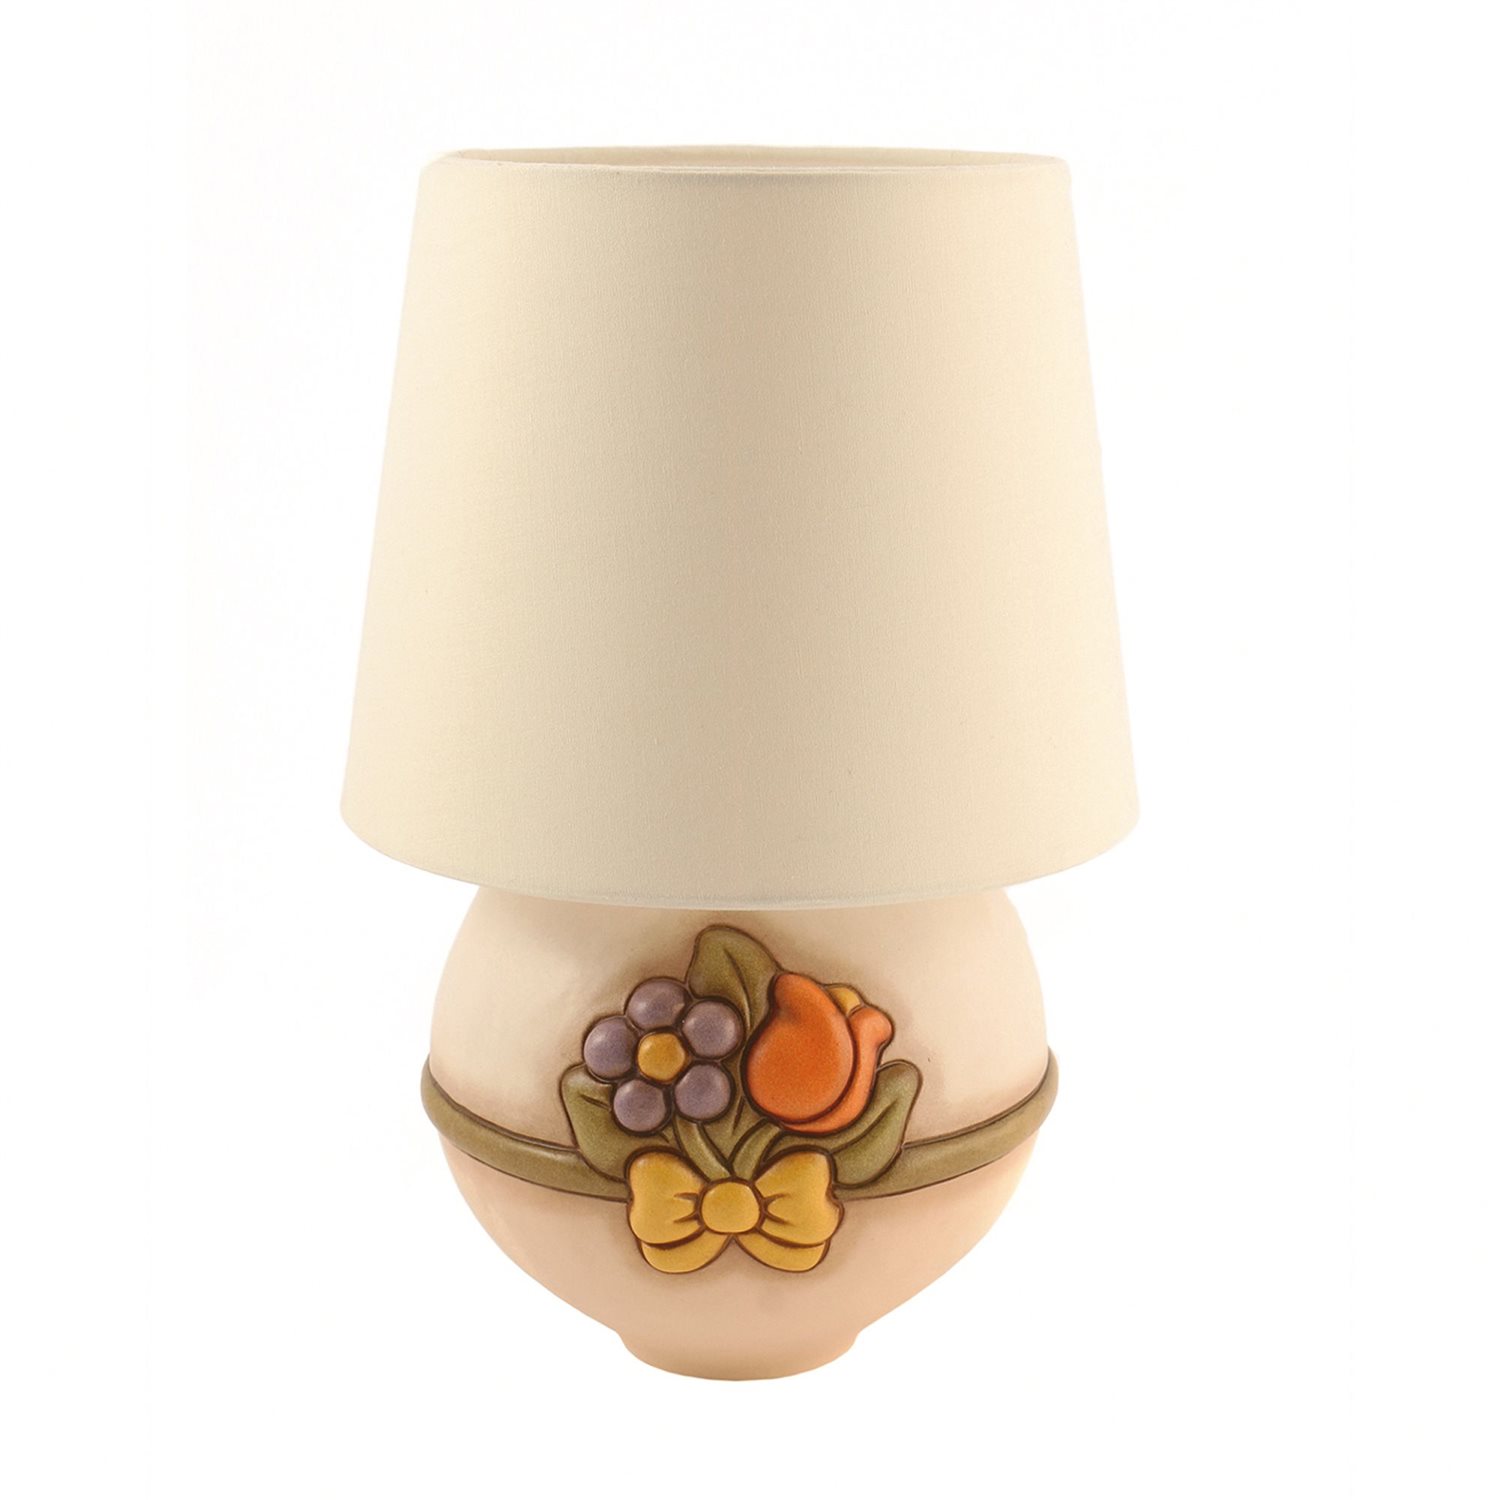 Oiritaly Lampada - Donna - Thun - C1939H90 - Ceramica